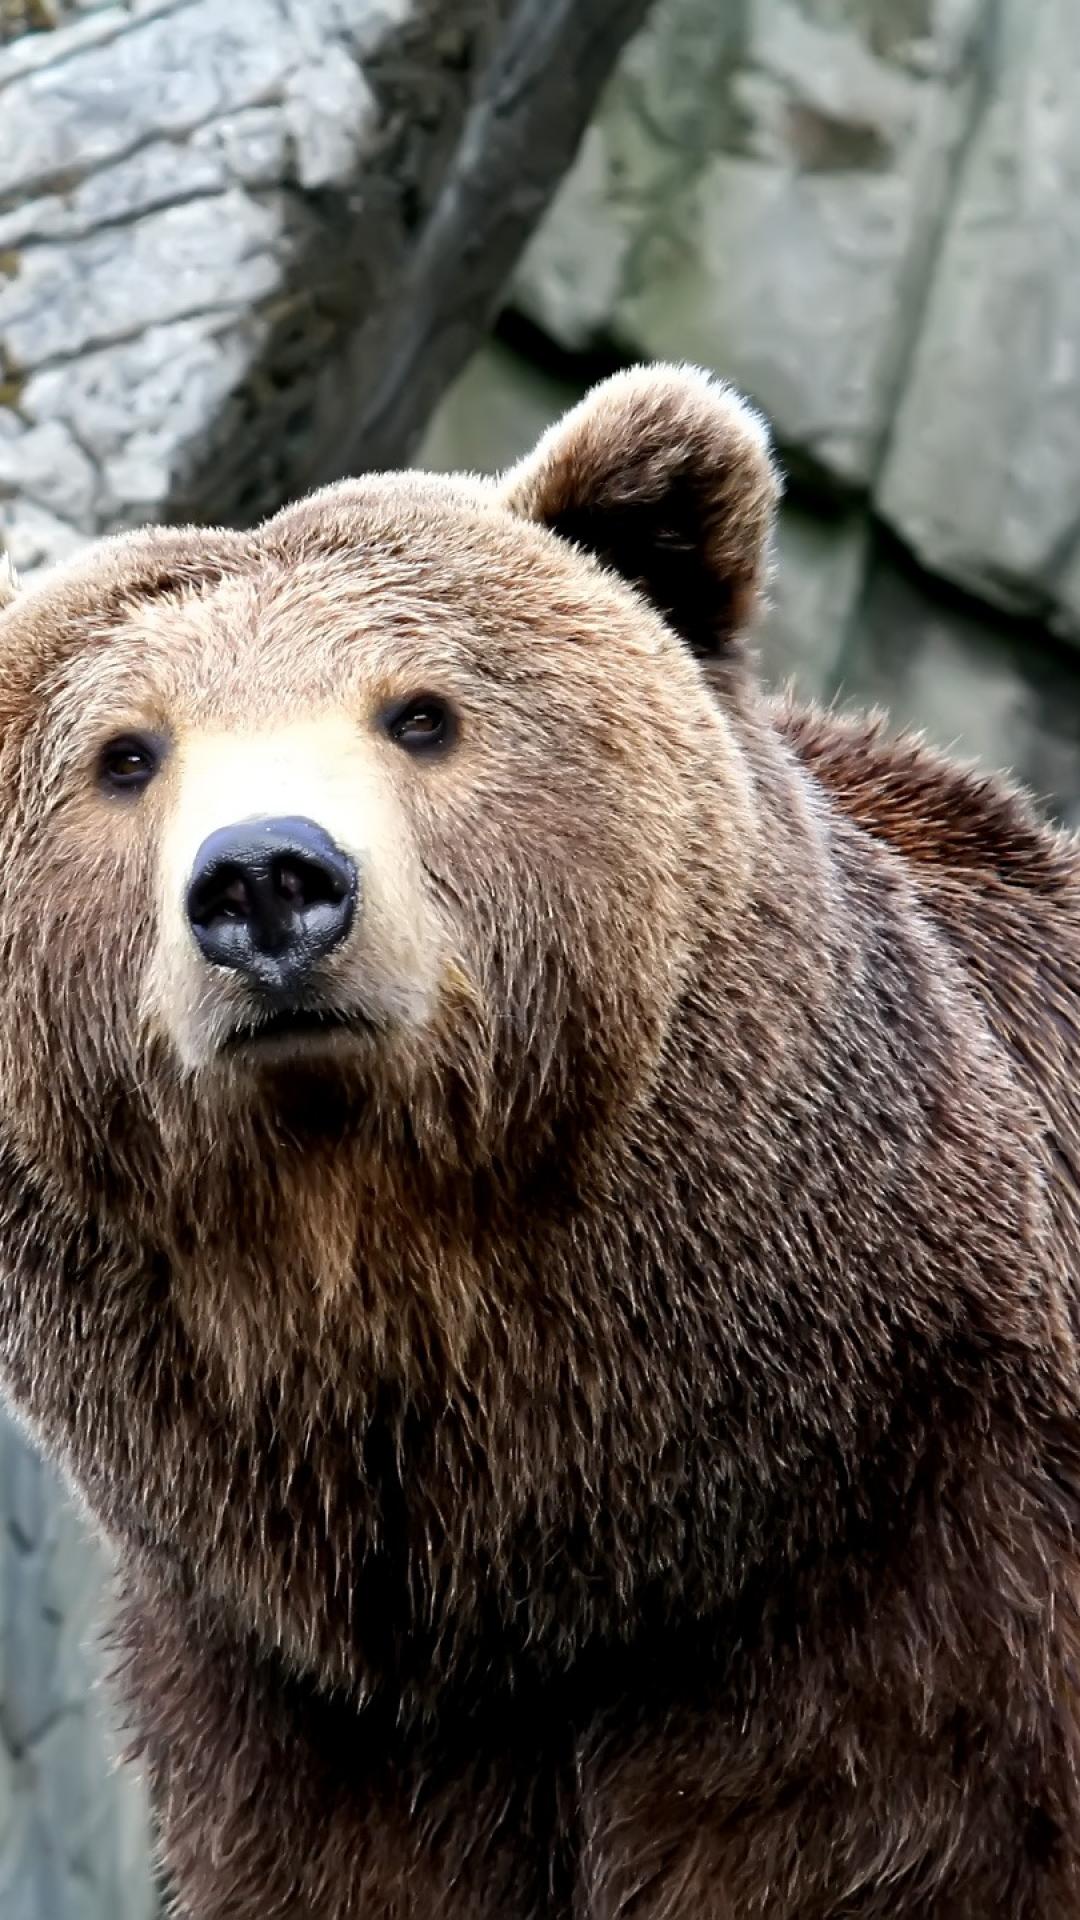 sfondi iphone orso polare,orso bruno,animale terrestre,orso grizzly,orso,orso kodiak